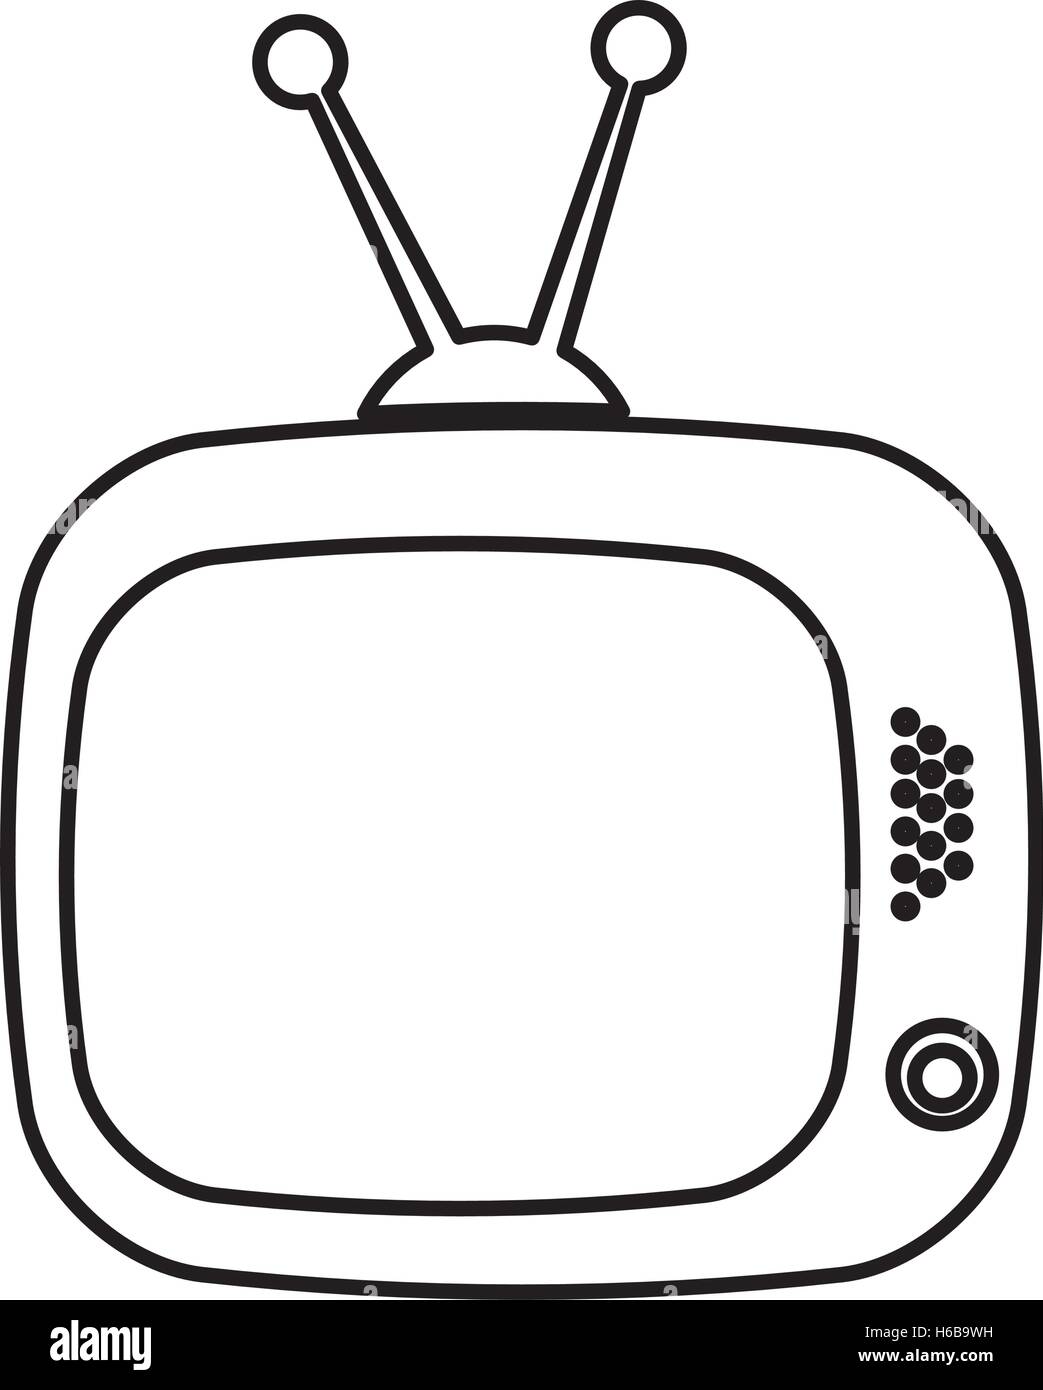 tv pictogram icon image Stock Vector Image & Art - Alamy